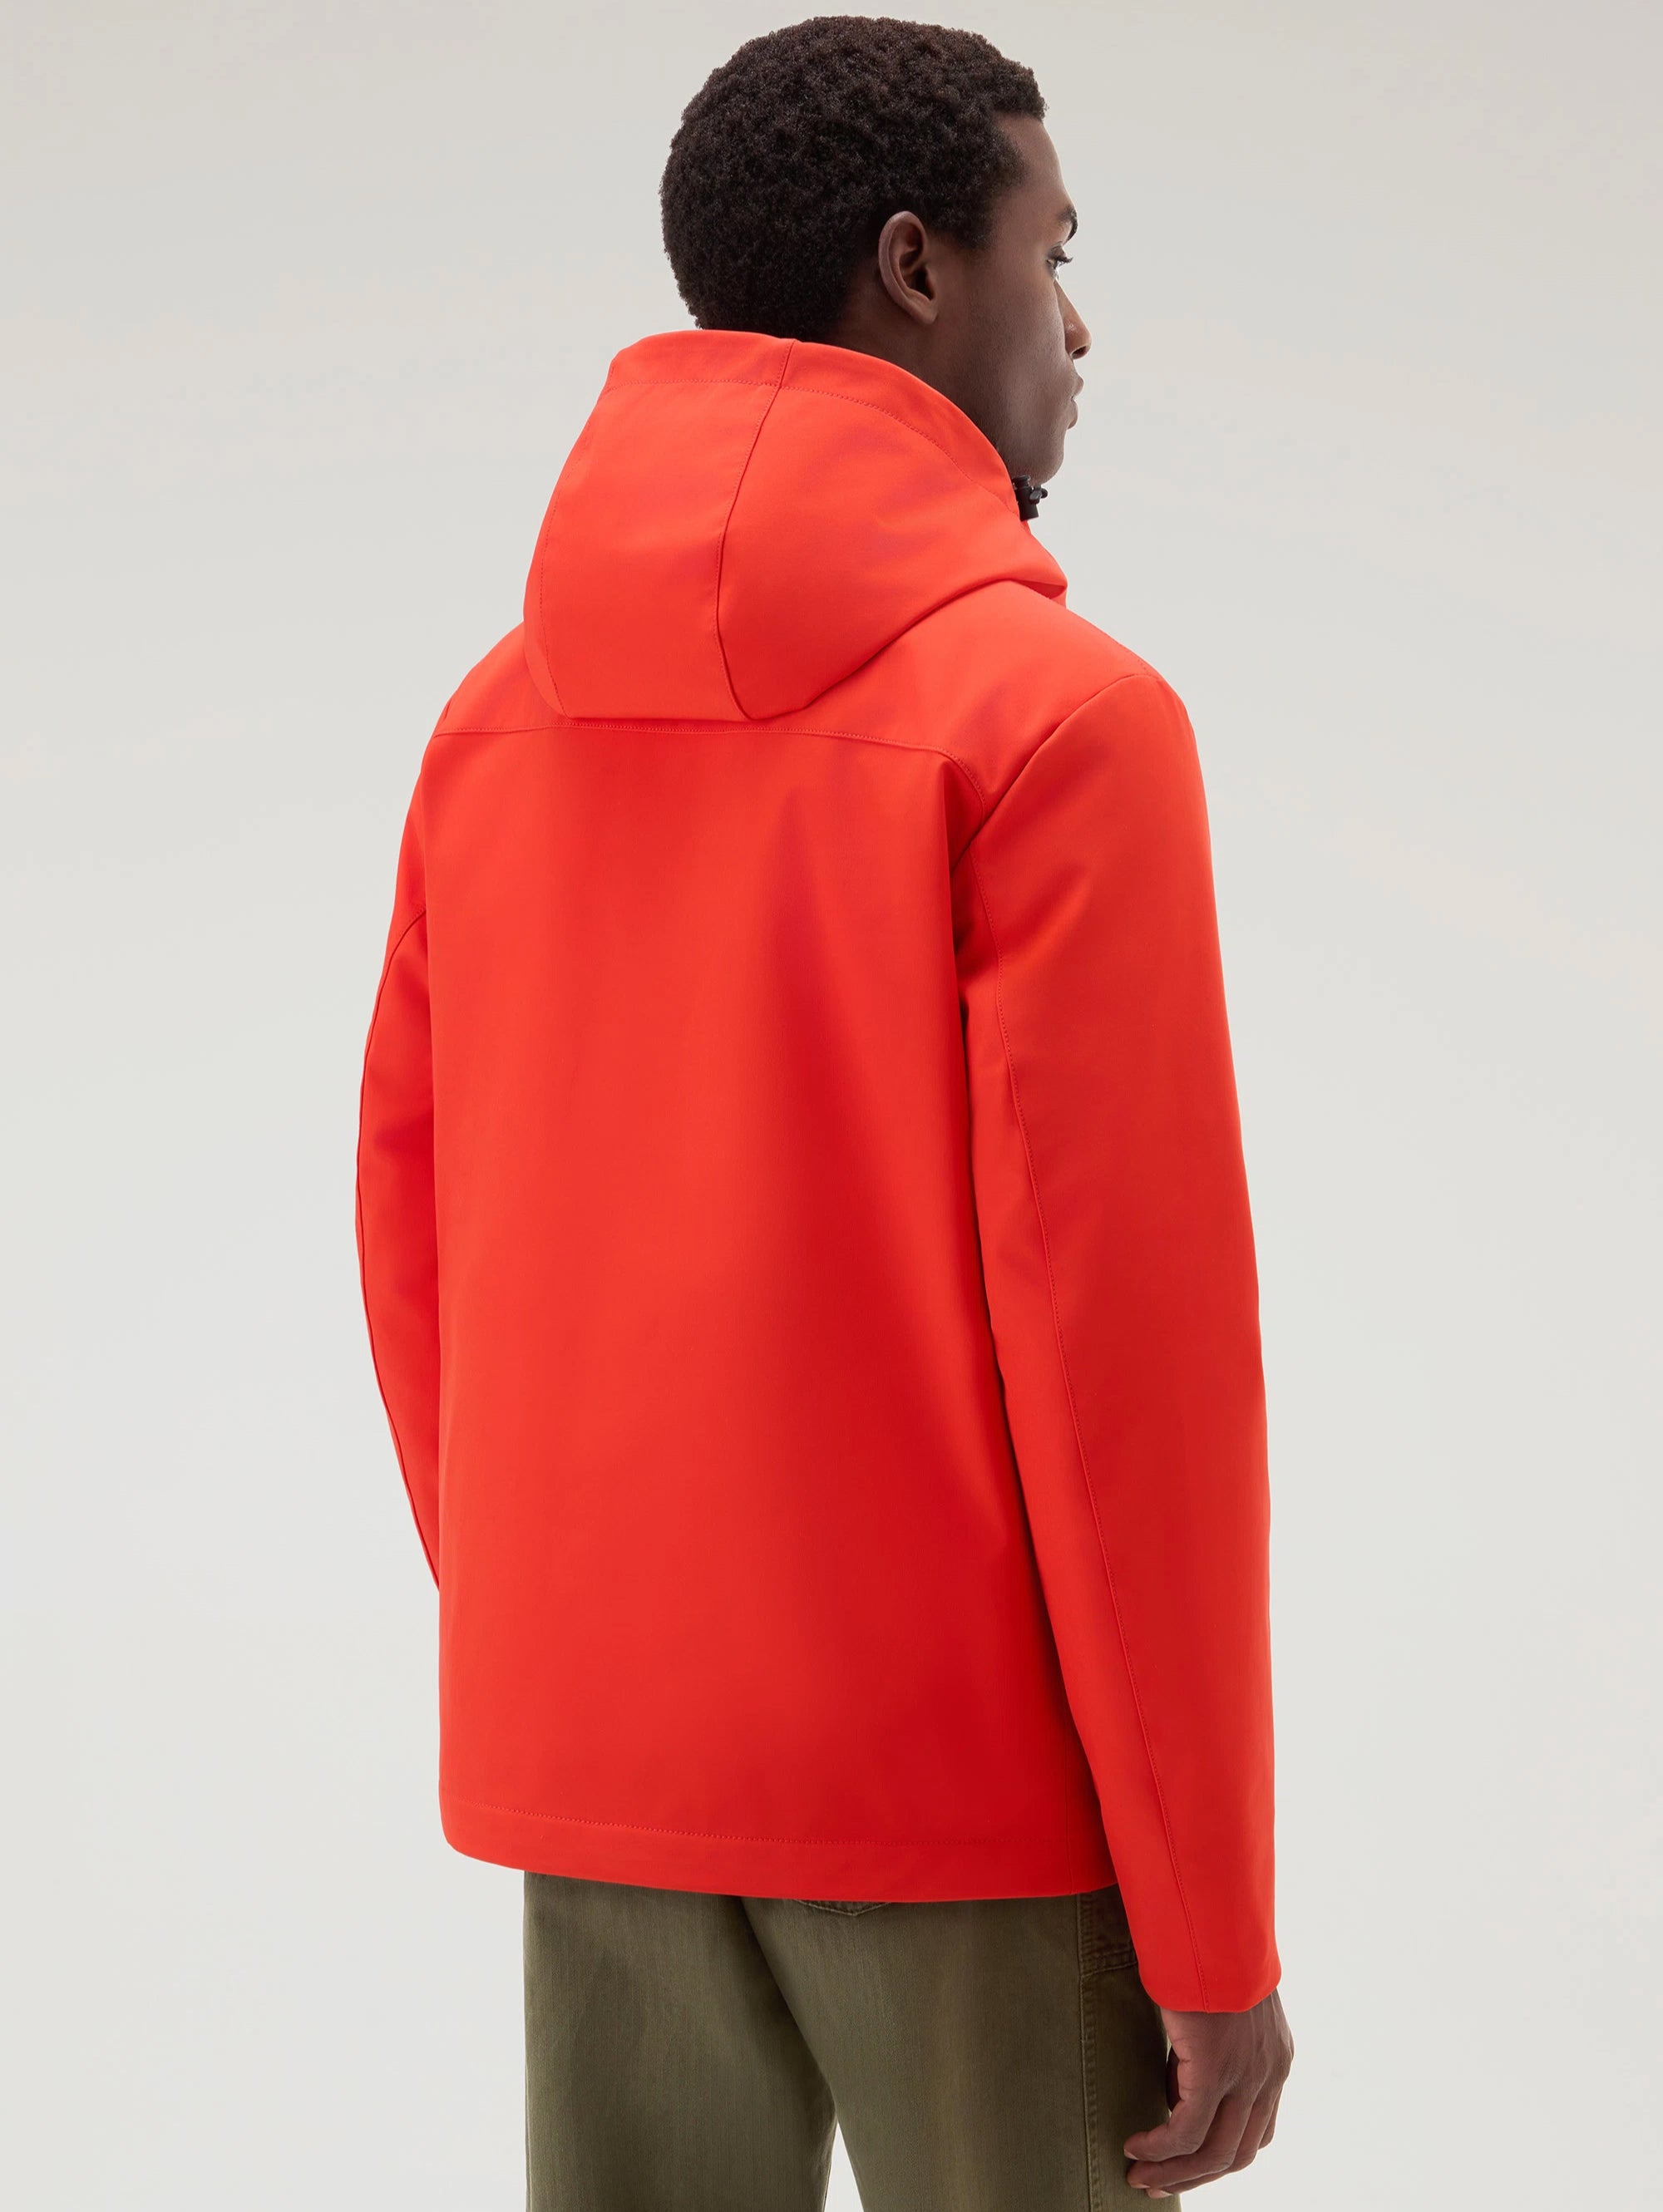 Pacific Orange Windproof Hooded Jacket